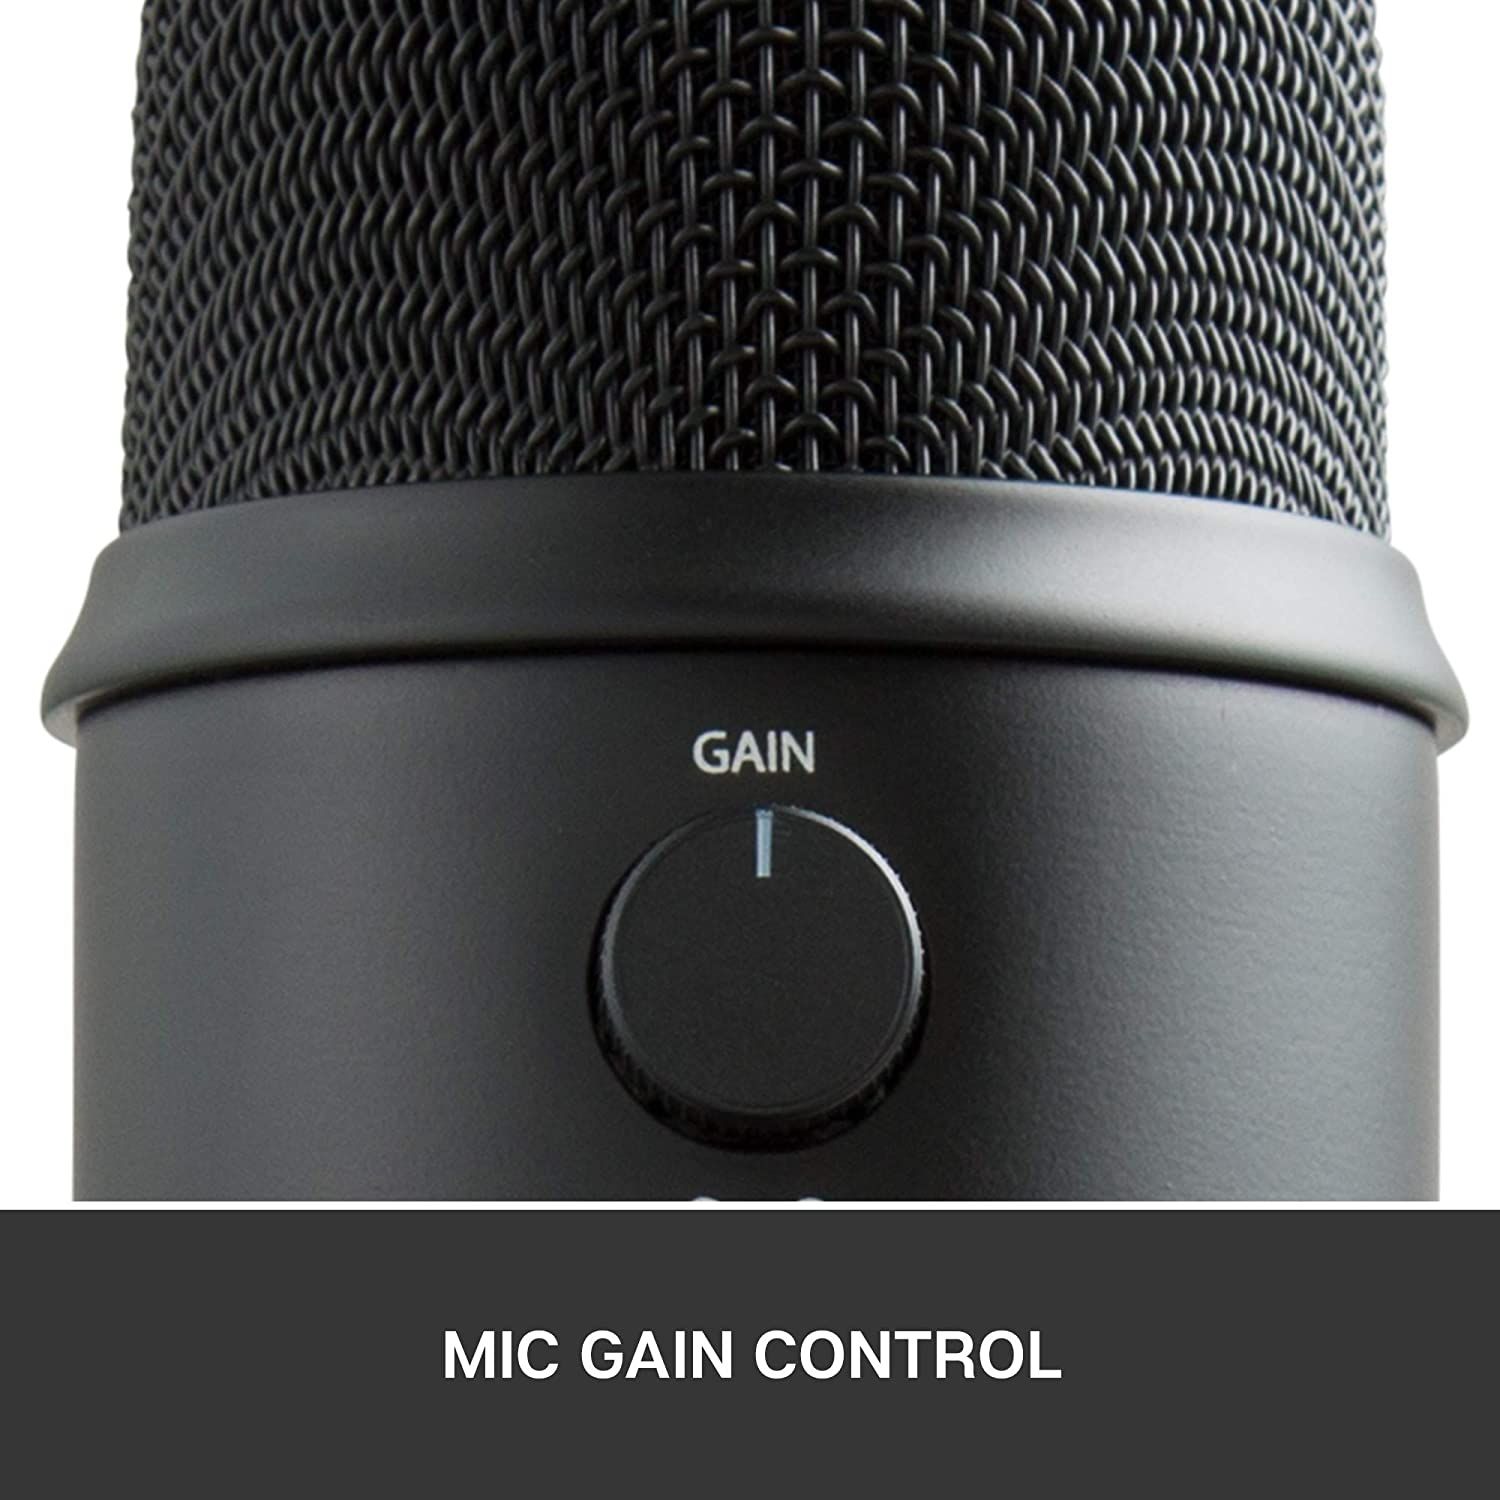 A visual for the gain knob of USB mic Blue Yeti